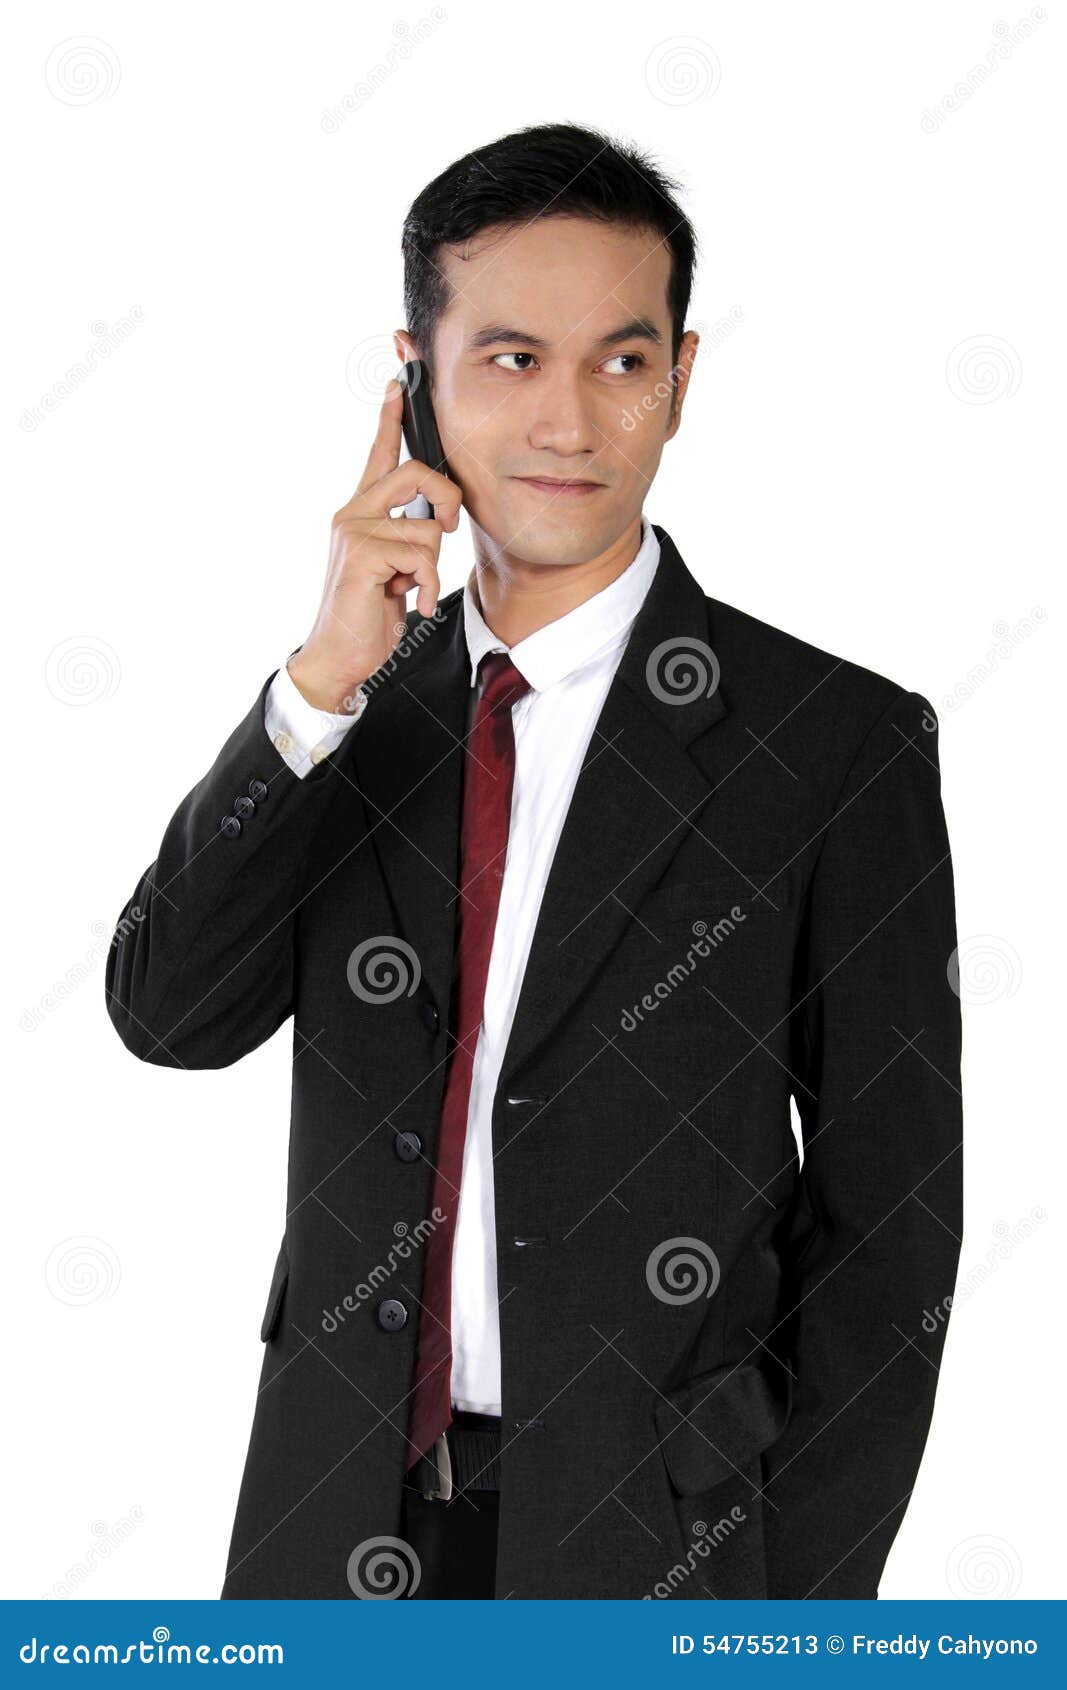 Young Boy Posing Street Phone Smart Stock Photo 205499788 | Shutterstock